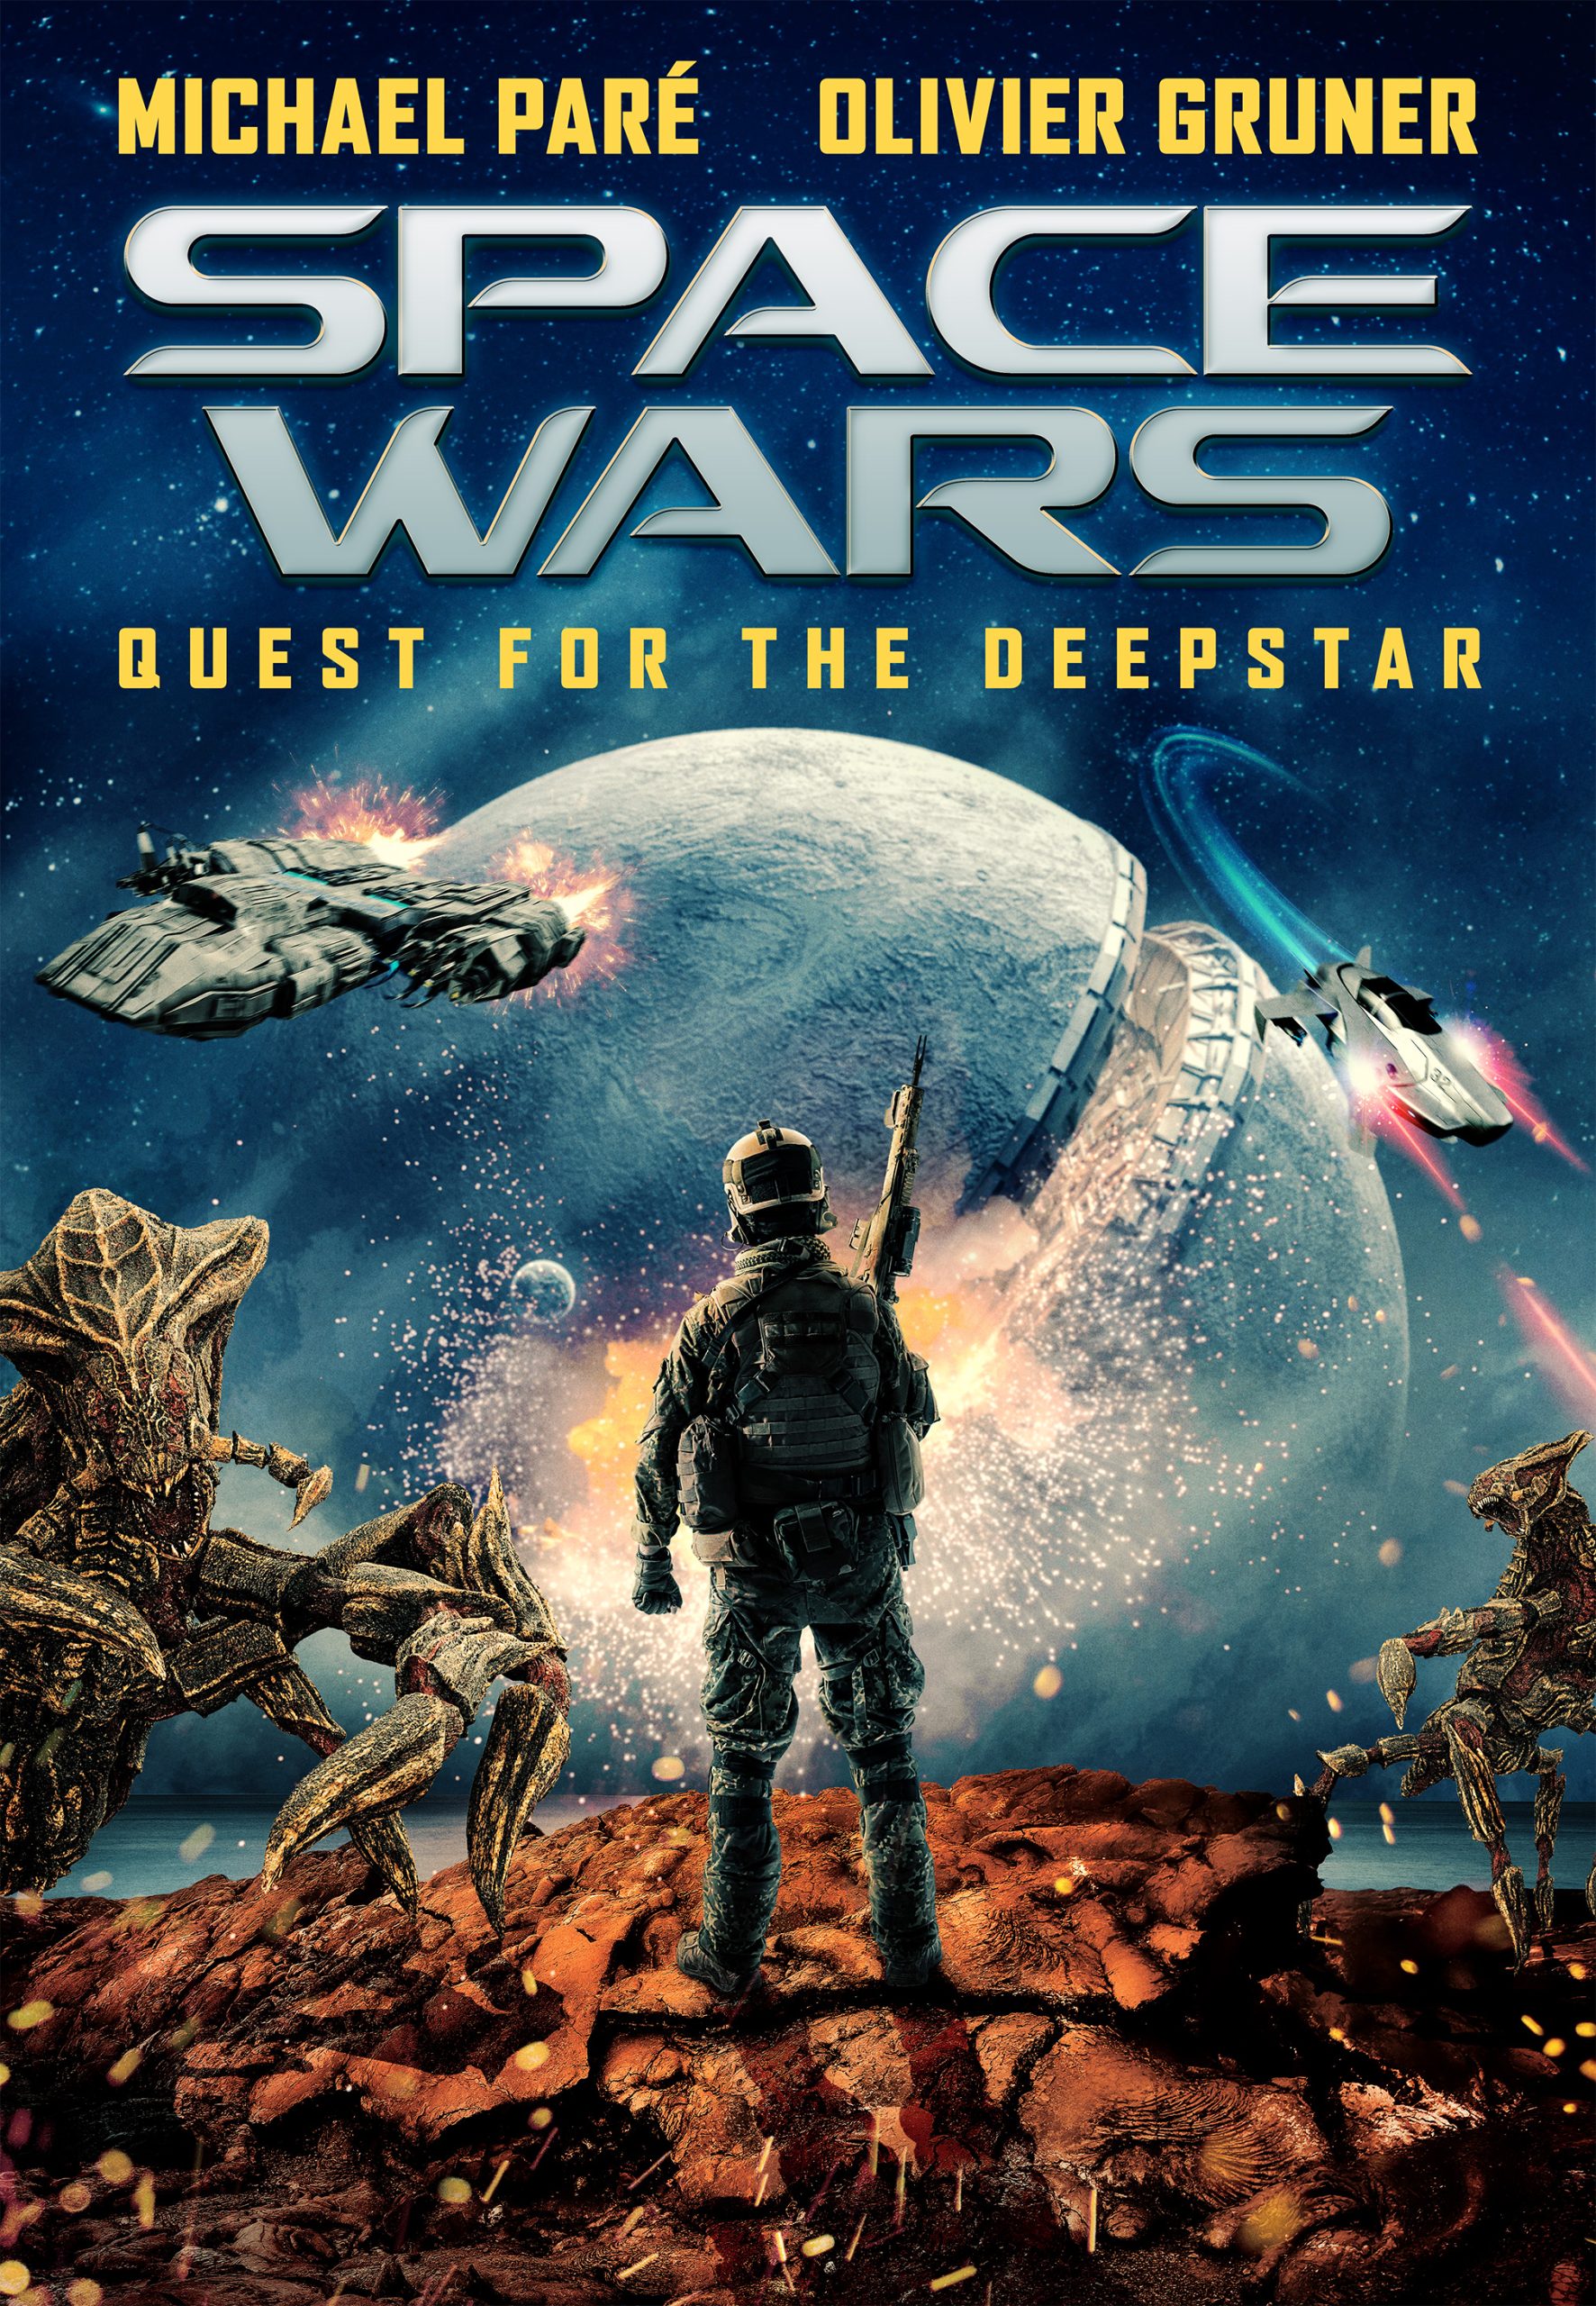 دانلود فیلم و سریال با لینک مستقیم - یک مووی - Space Wars: Quest for the  Deepstar دانلود فیلم